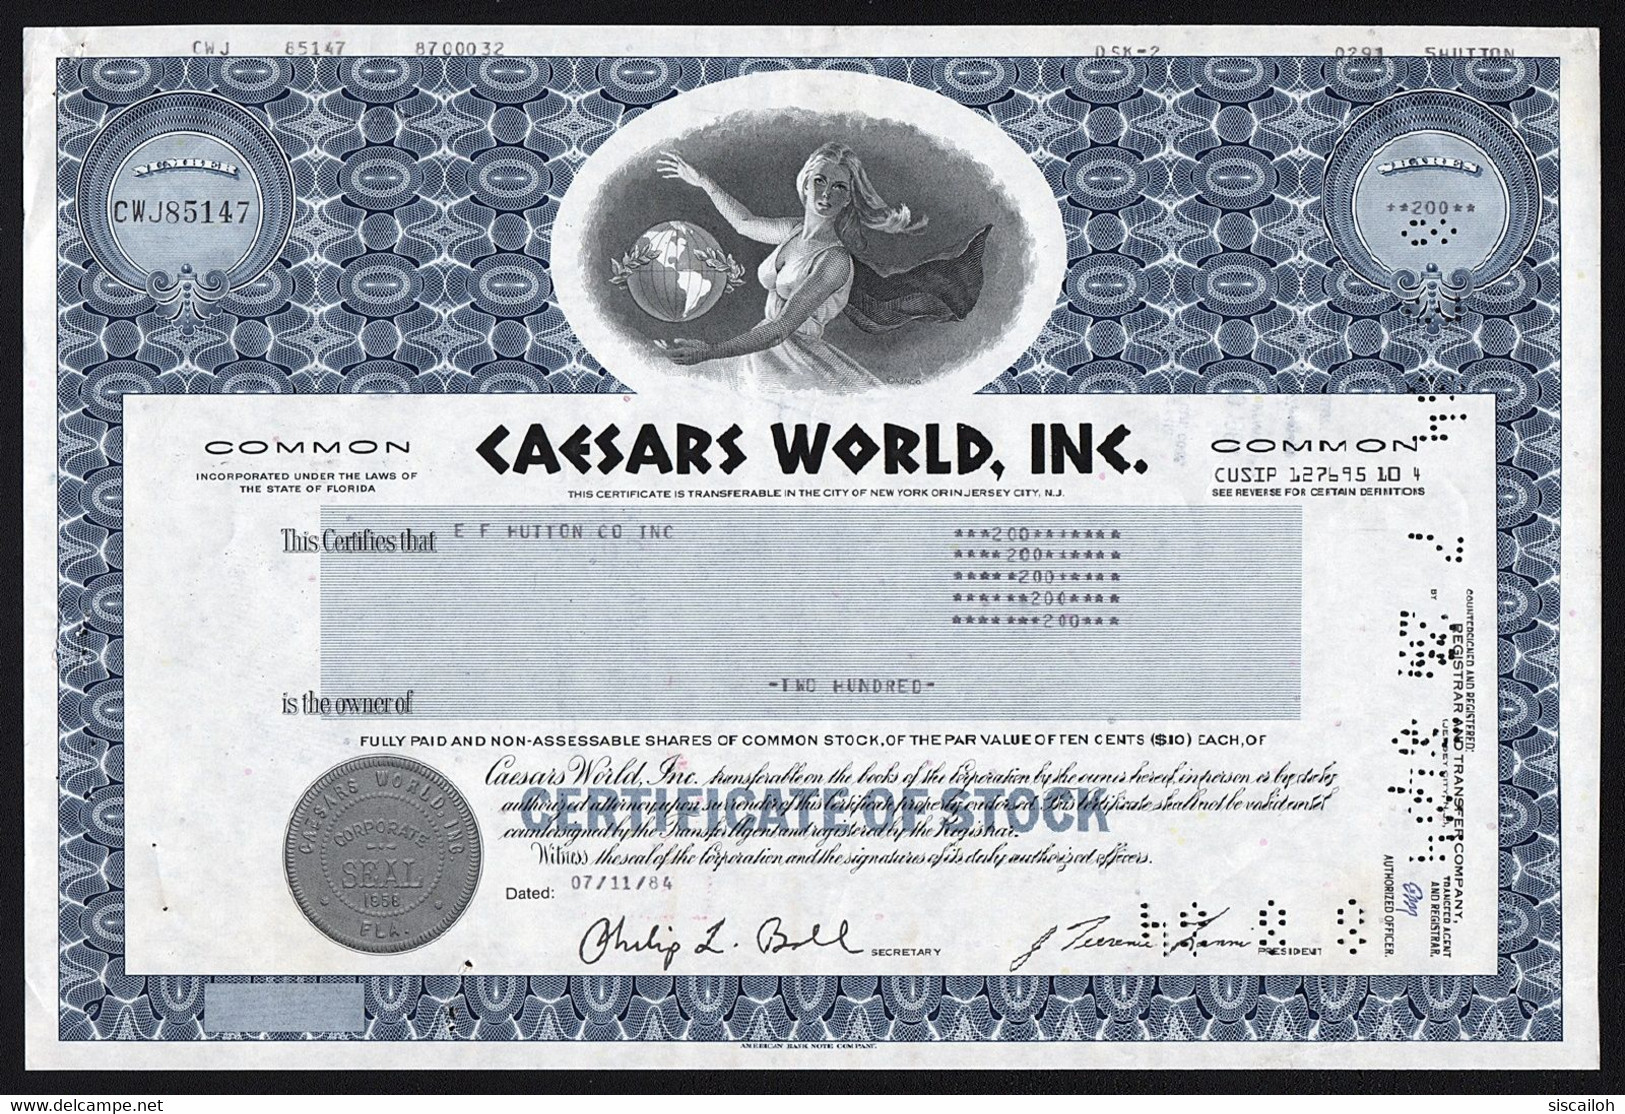 1984 Florida: Caesars World, Inc. - World Famous Las Vegas Casino - Casinos